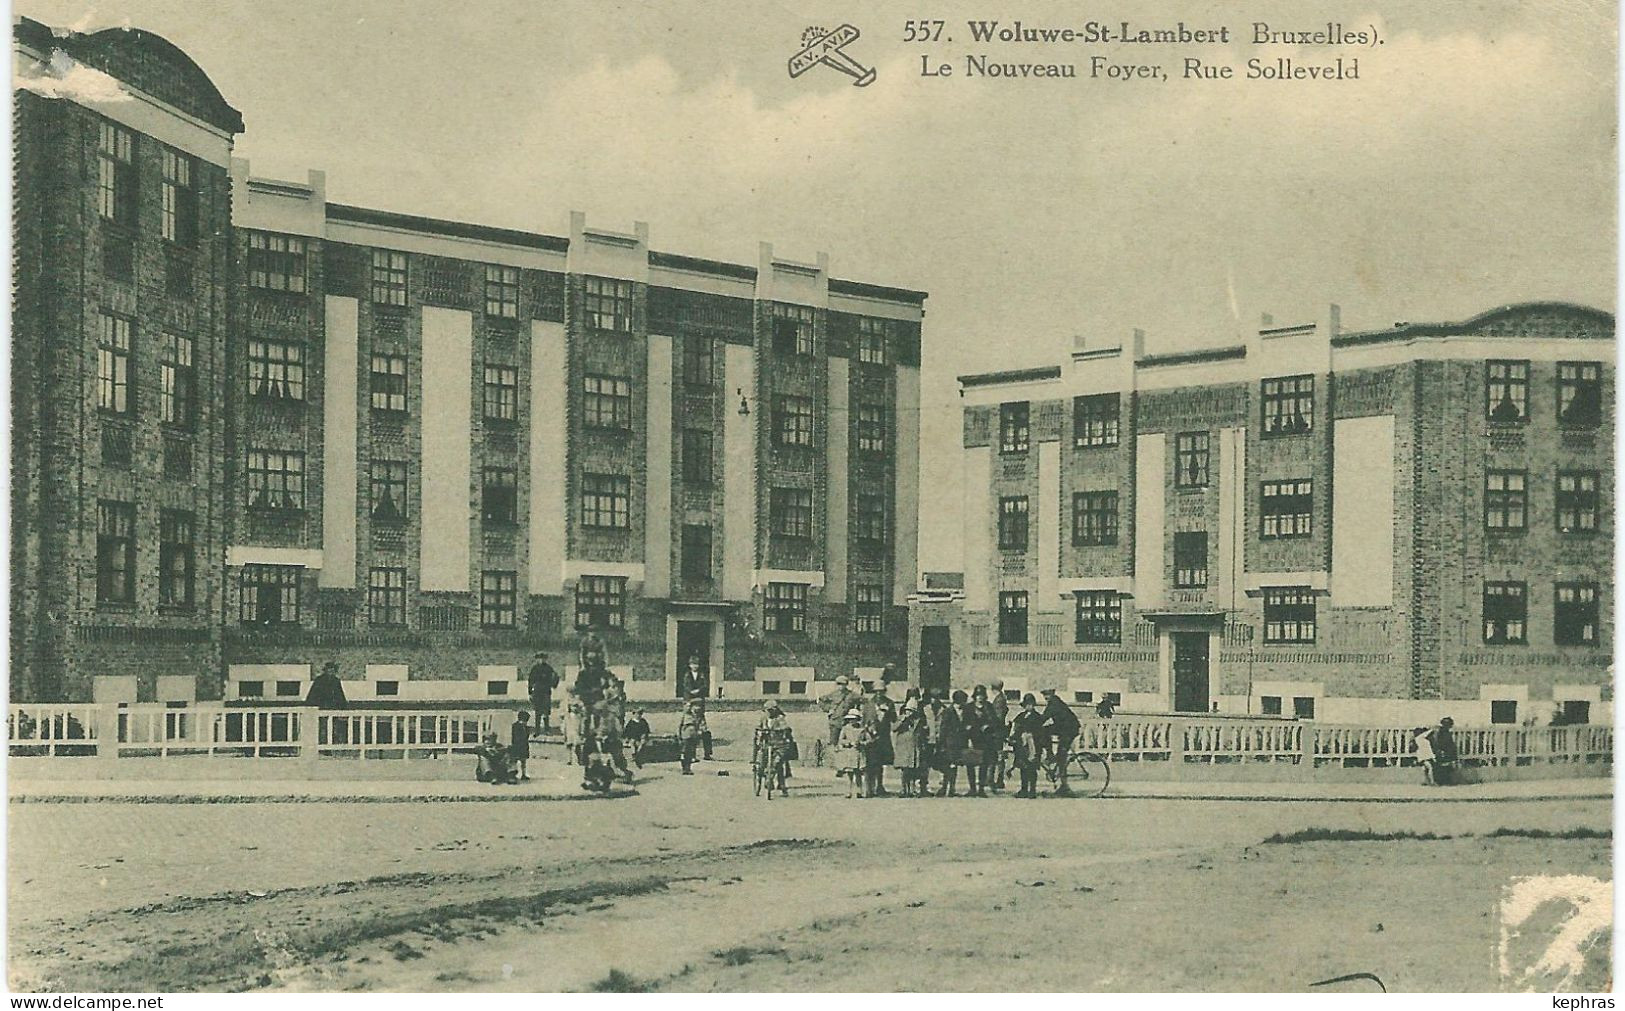 557. WOLUWE-ST-LAMBERT : Le Nouveau Foyer - Rue Solleveld Cachet De La Poste 1930 - St-Lambrechts-Woluwe - Woluwe-St-Lambert